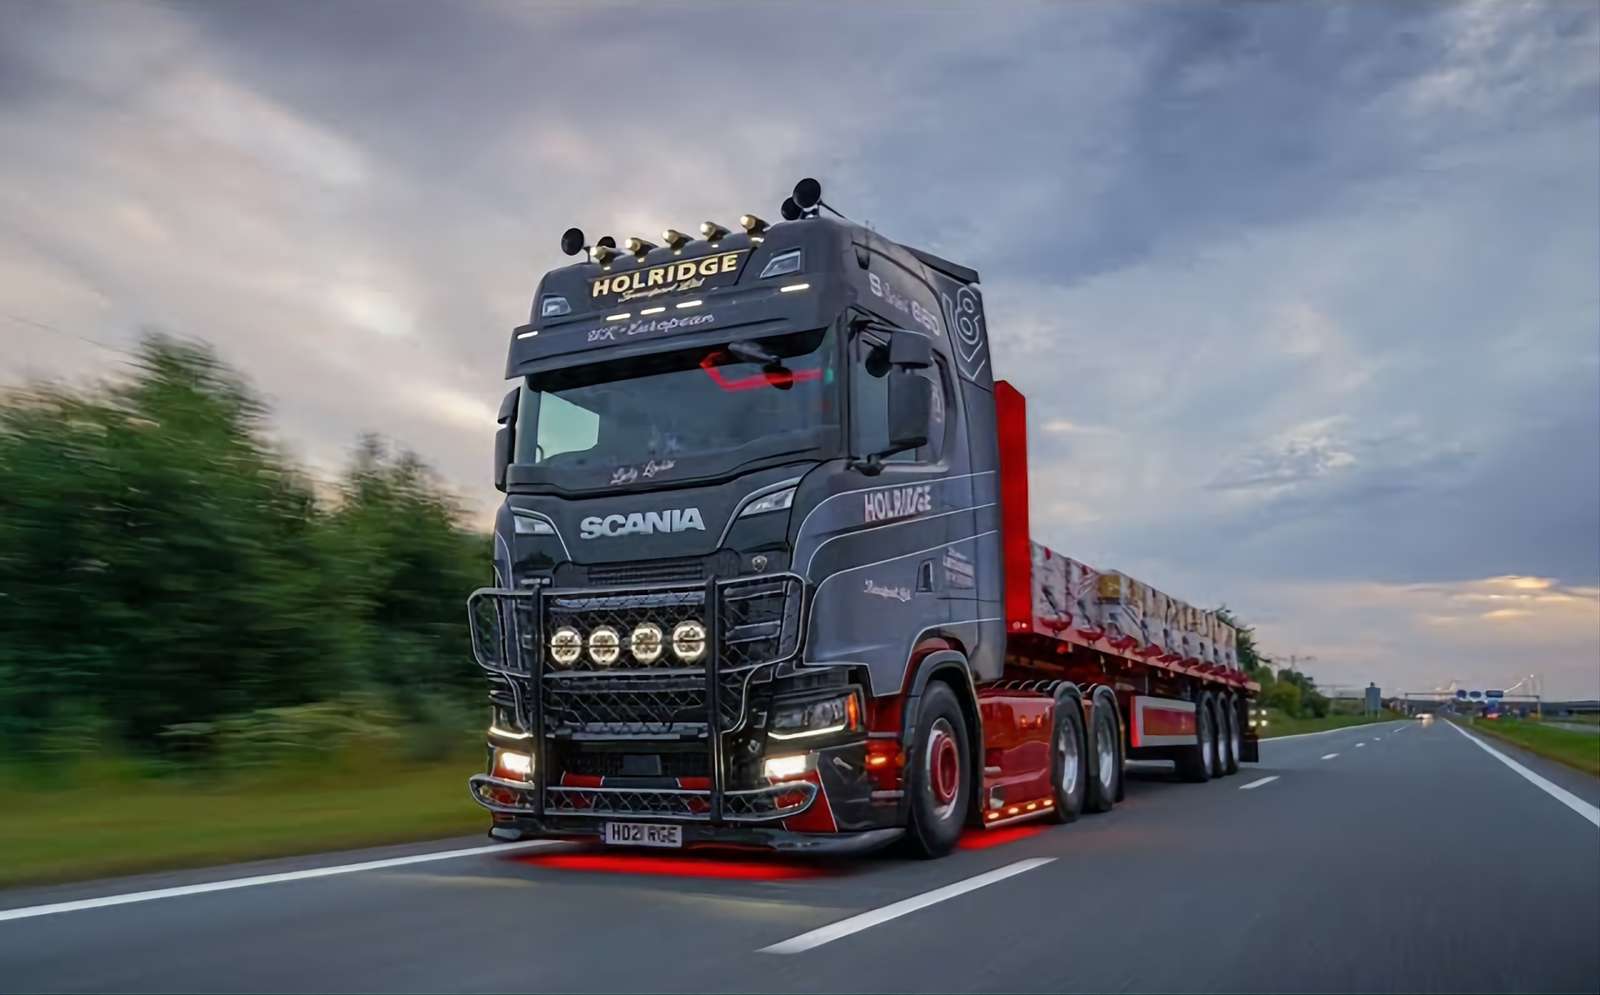 Holridge Scania V8 puzzle online ze zdjęcia